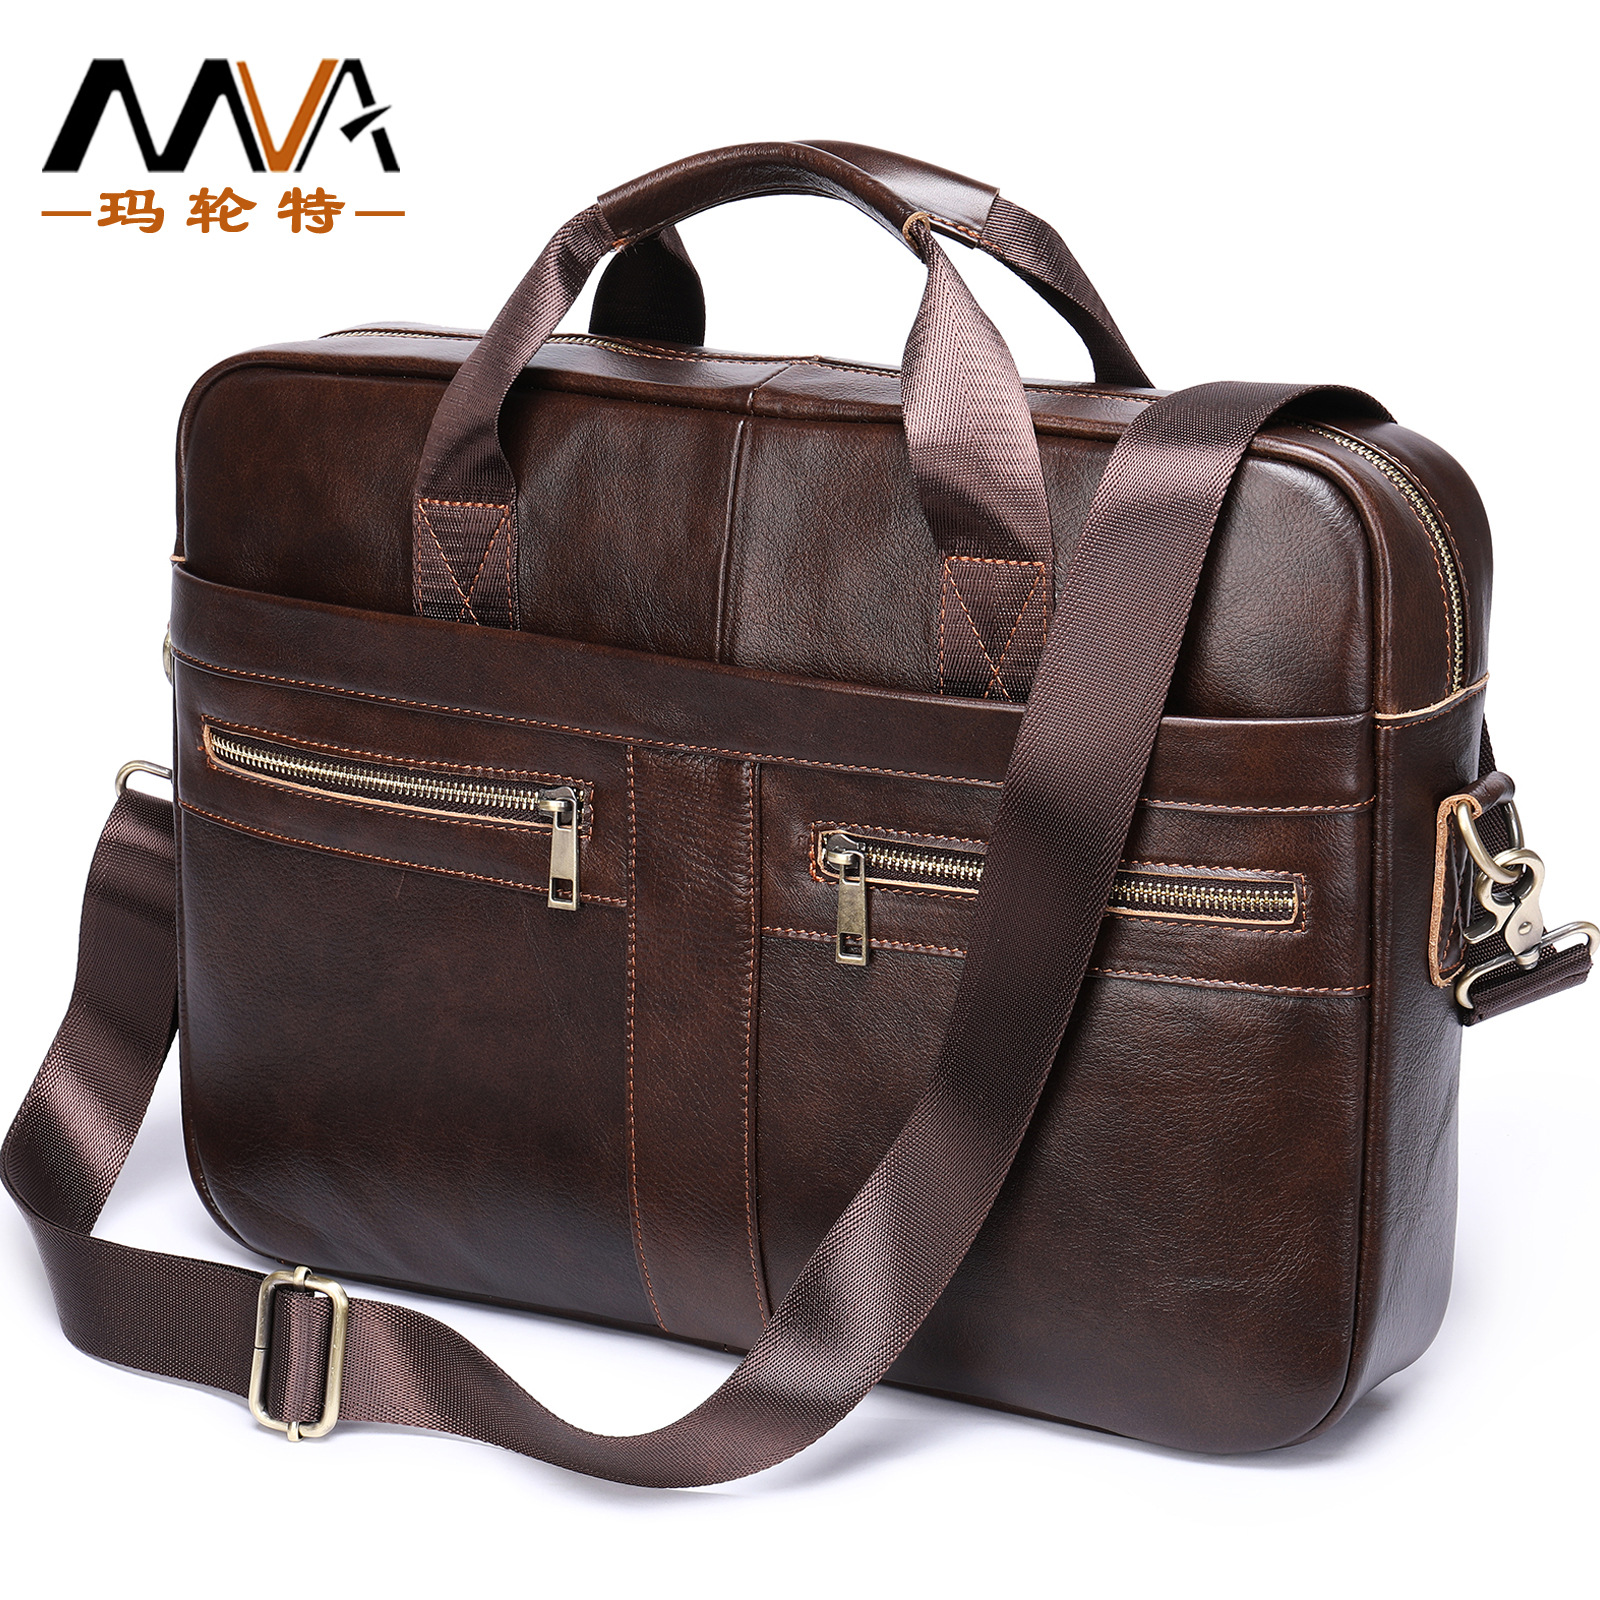 MVA new men's bag men's leather business briefcase true leather 15.6 inch computer bag leather handbag man